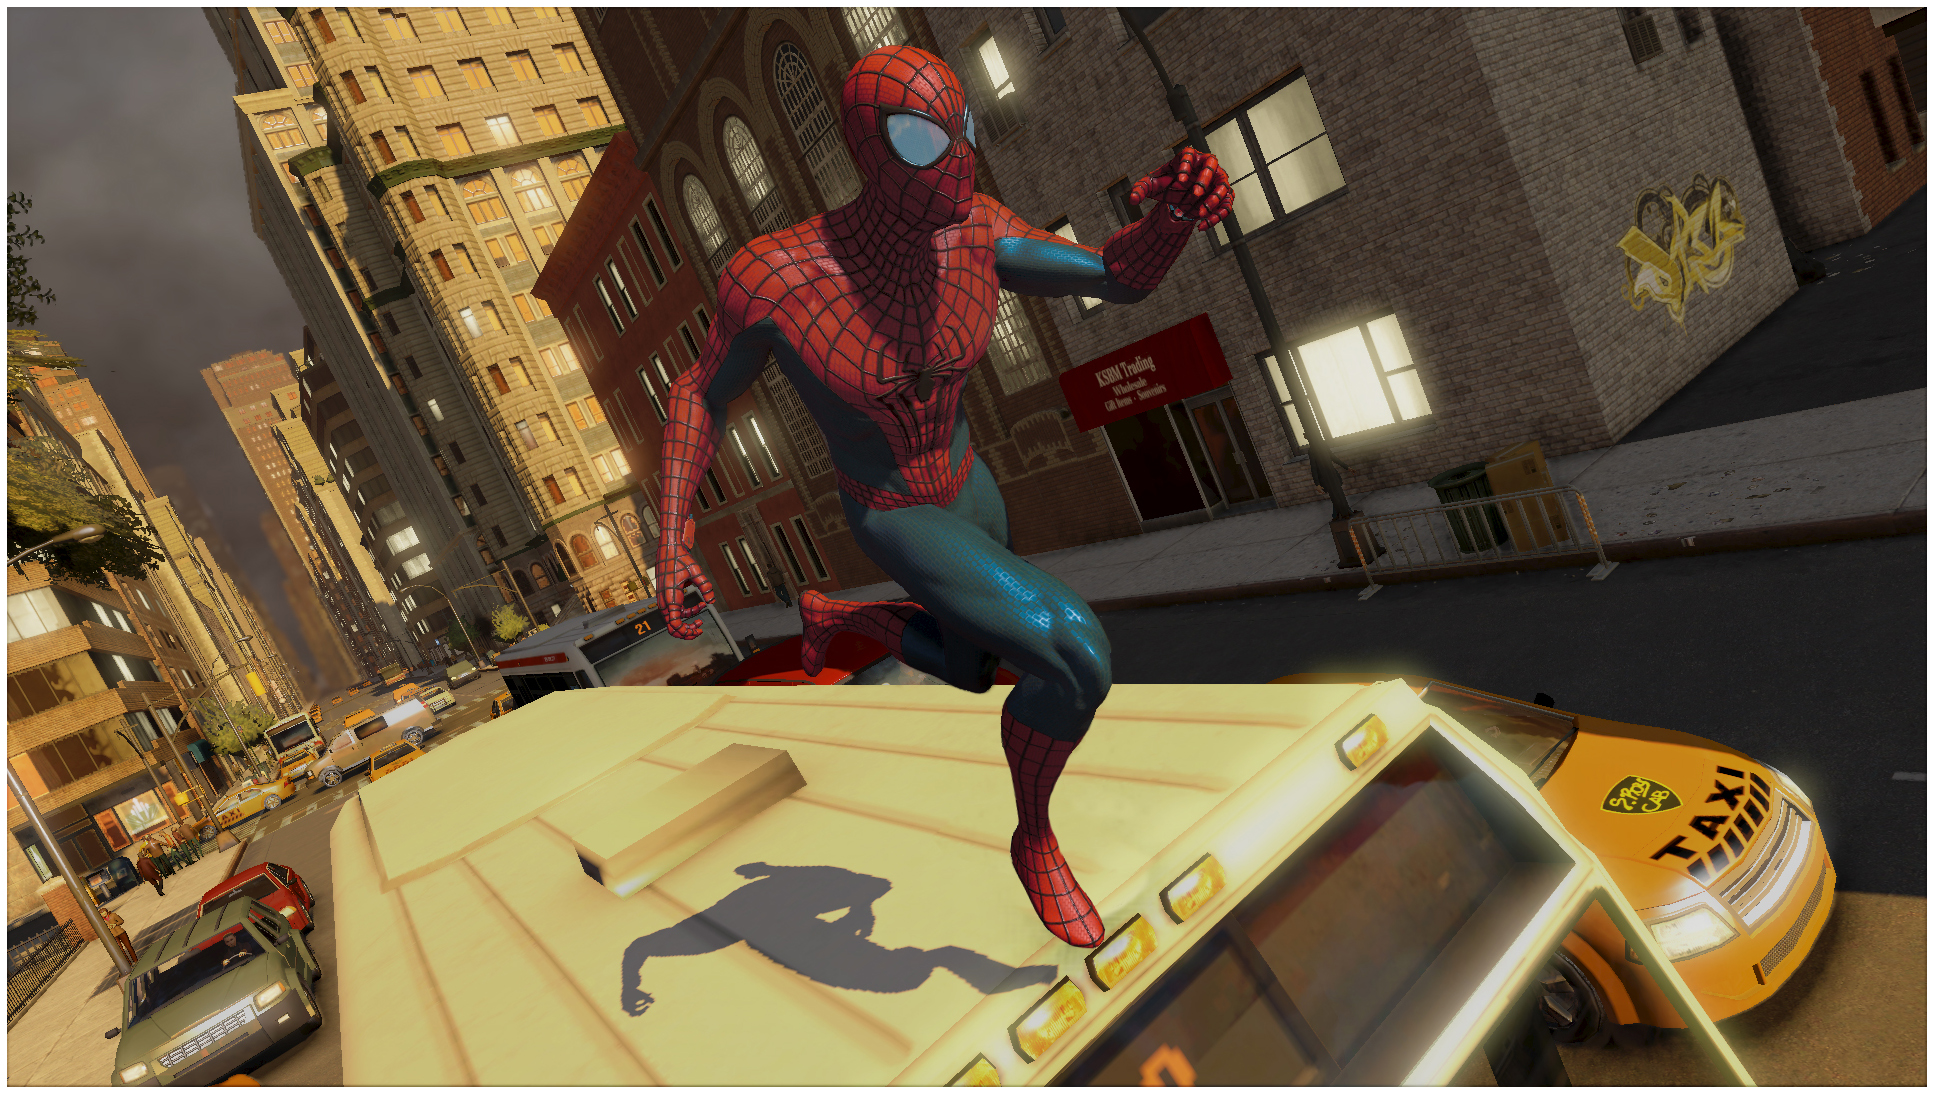 Marvel s spider man 2 1.3 2. The amazing Spider-man 2 игра. Амазинг Спайдермен 2 игра. The amazing Spider-man (игра, 2012). Человек паук 2 игра 2014.